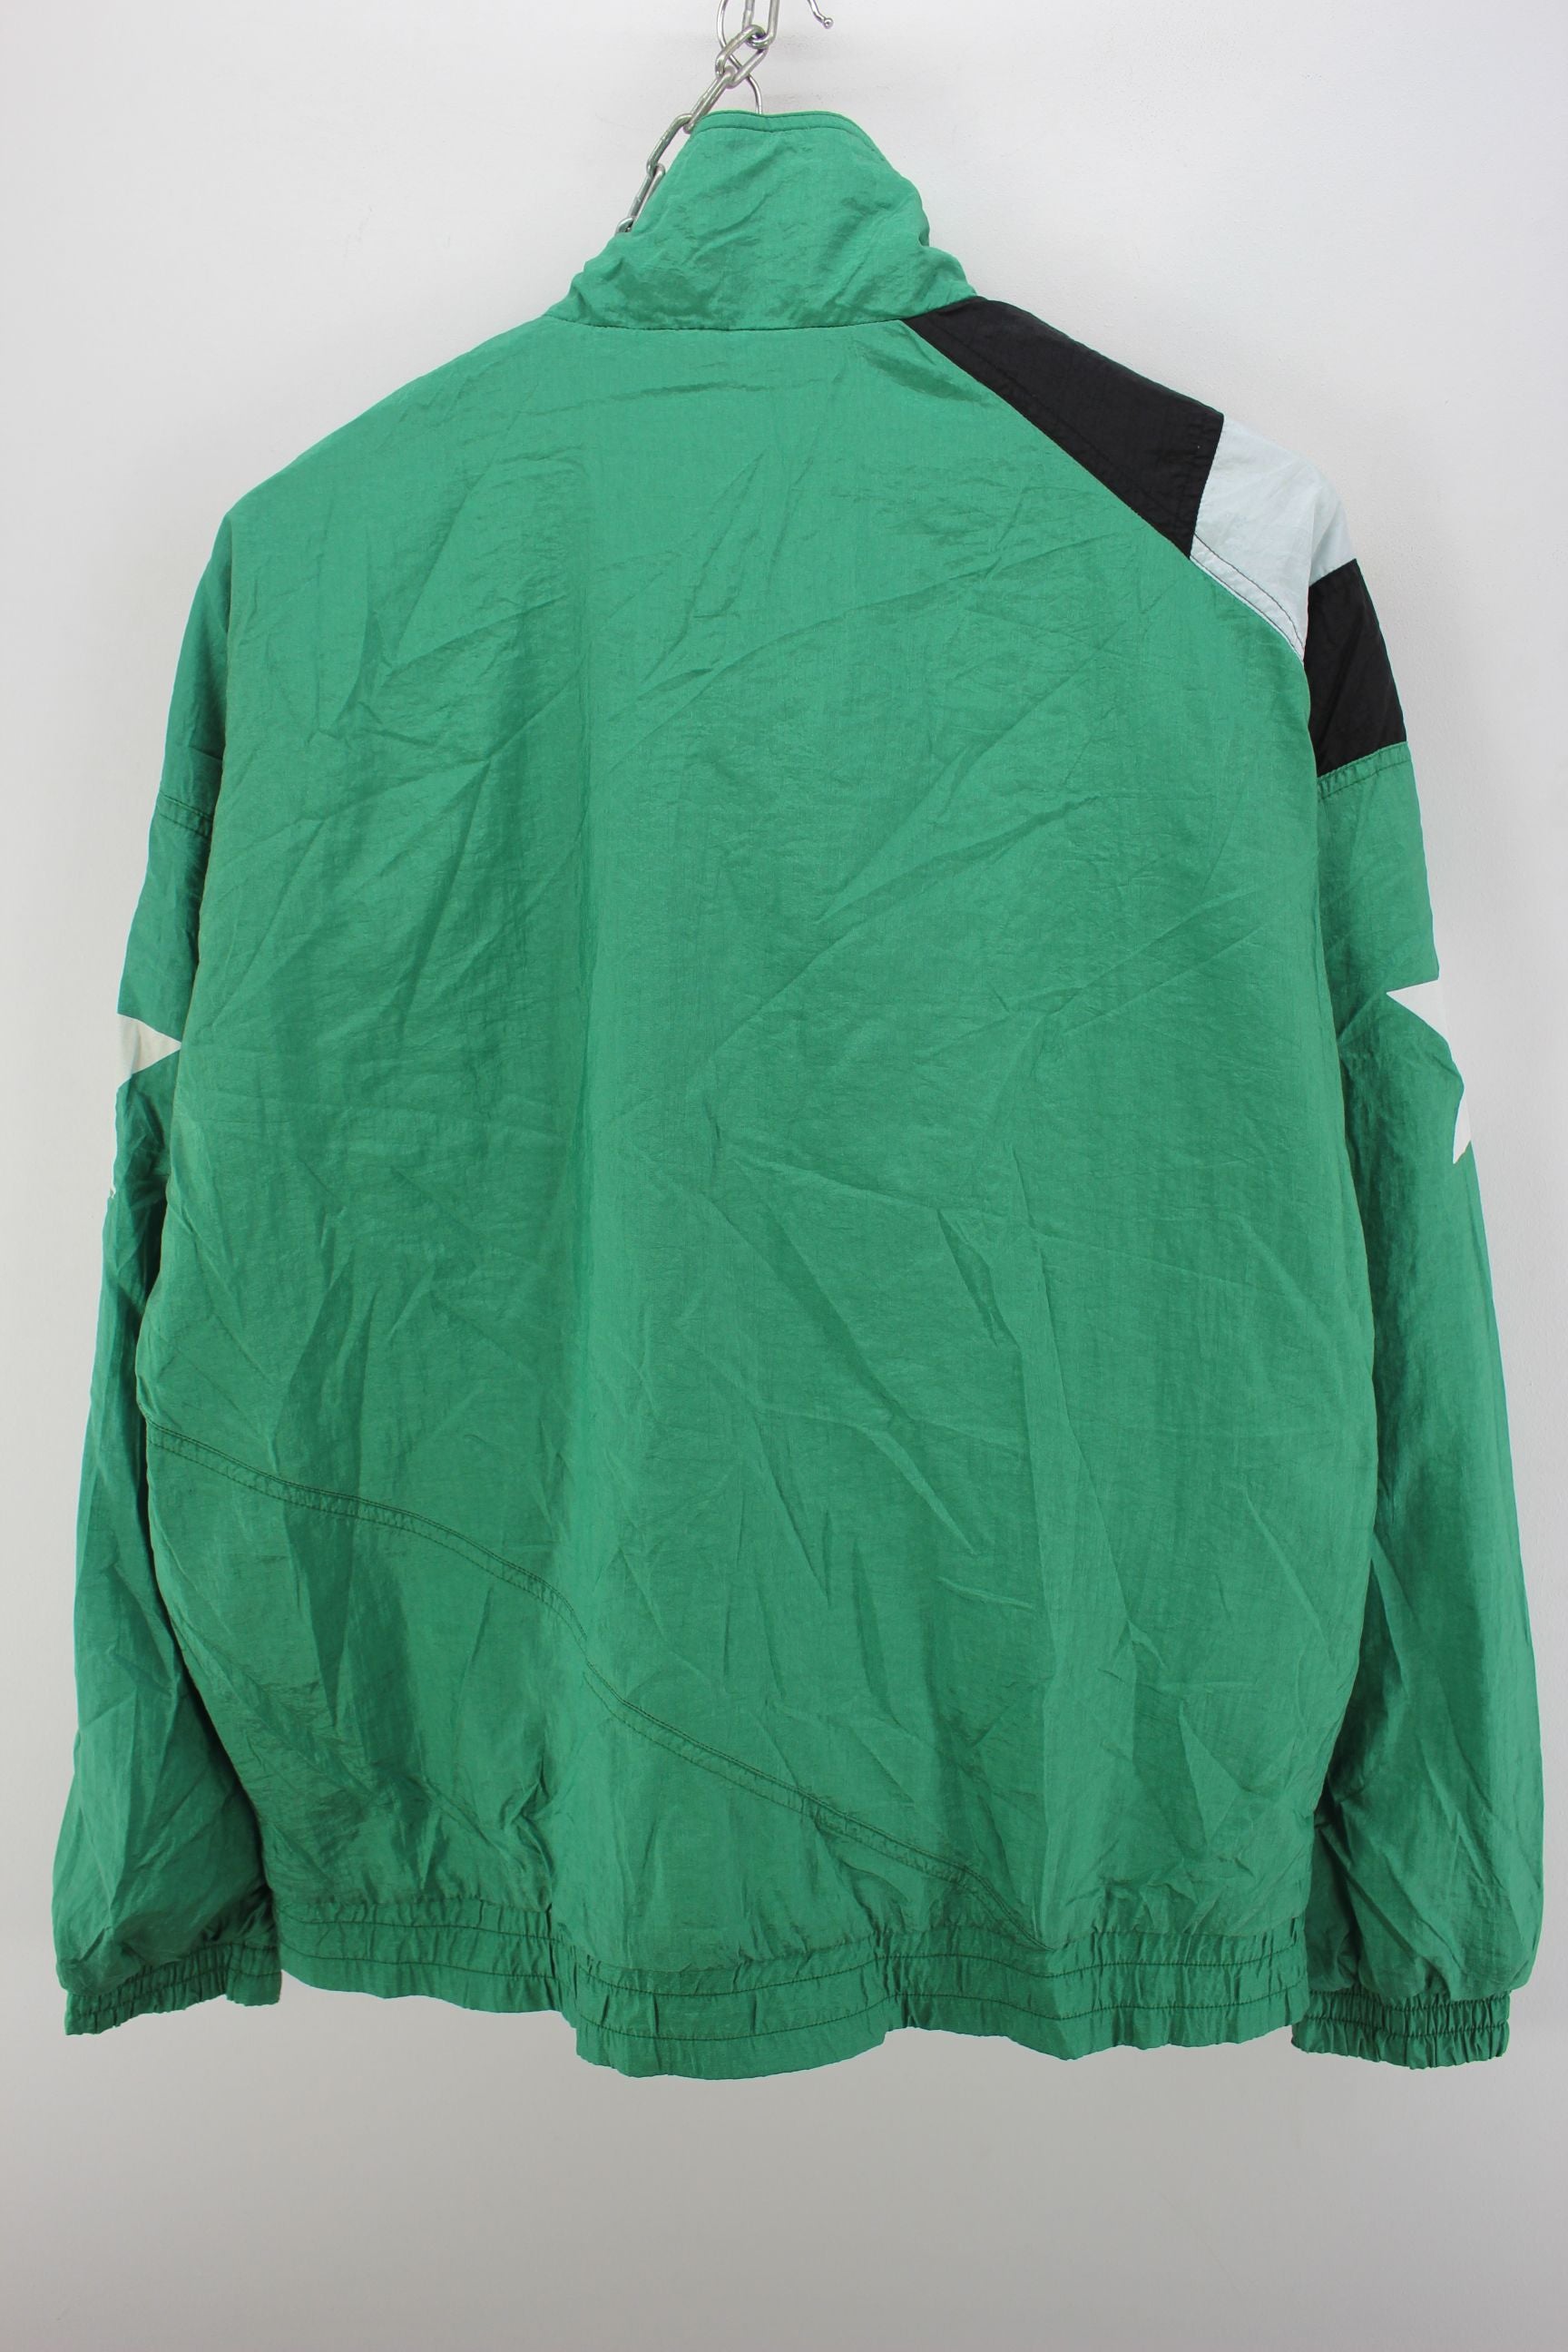 green puma track jacket